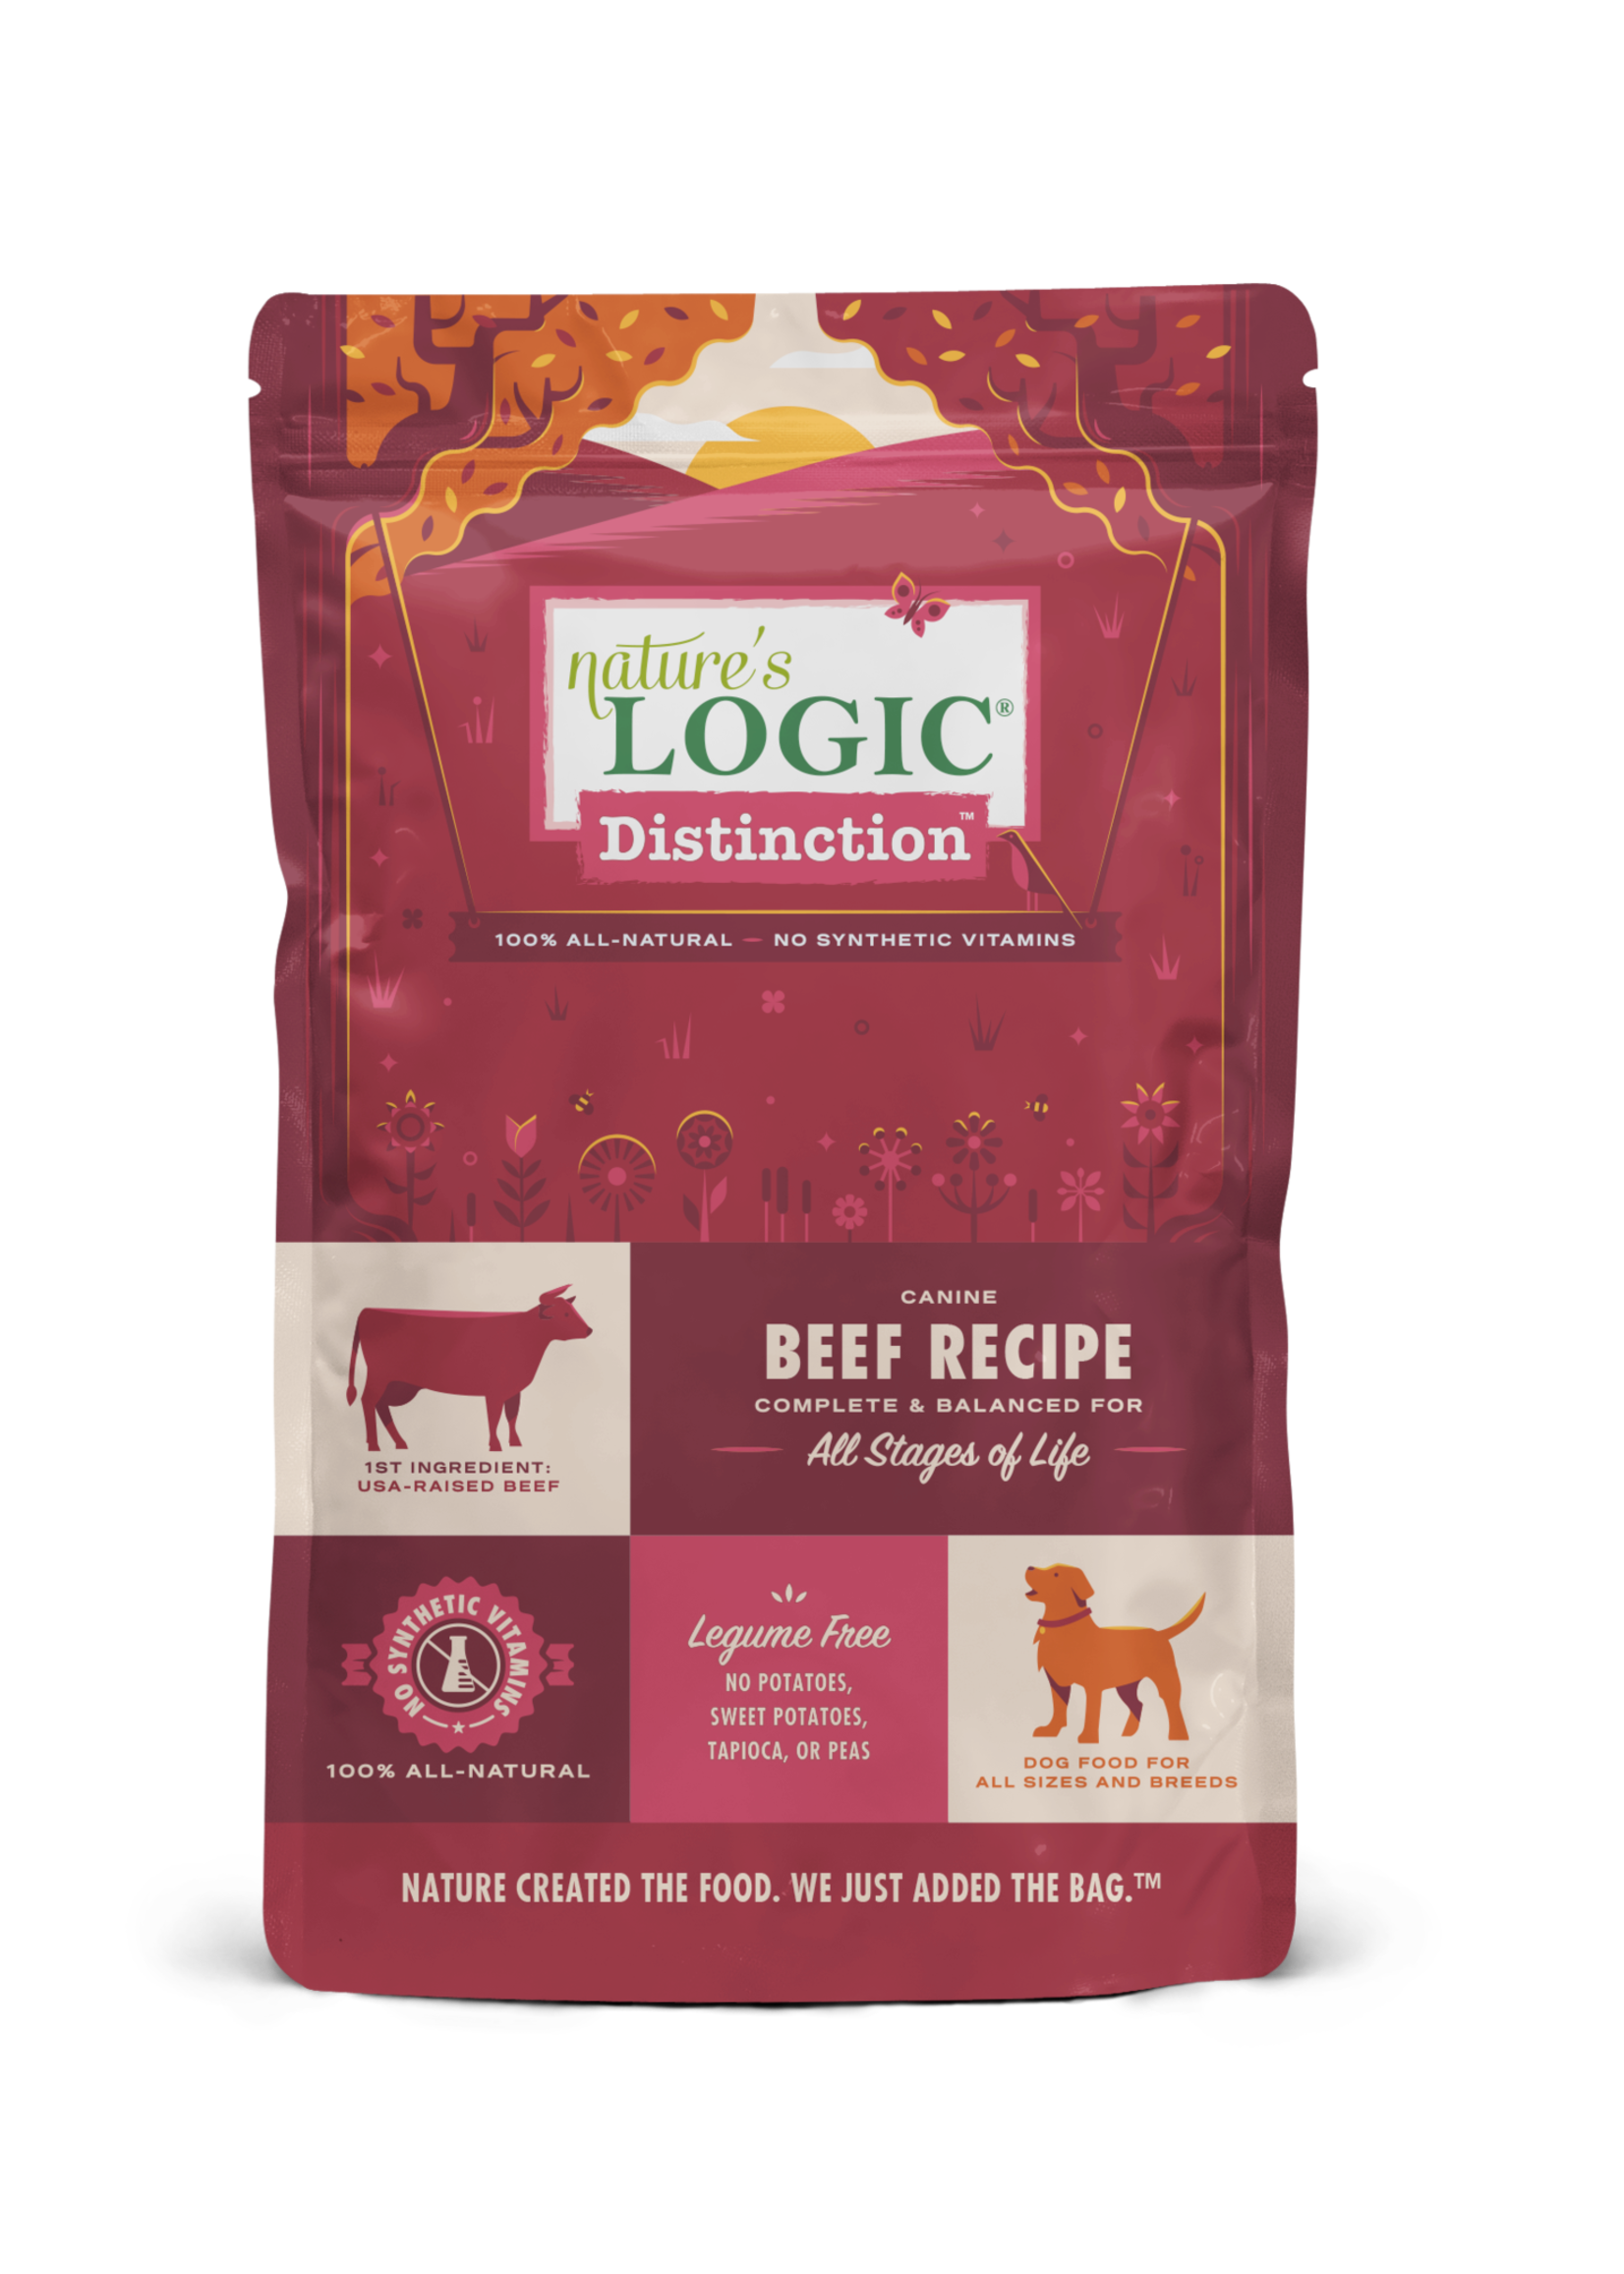 Nature's Logic Nature's Logic Distinction Beef Dry Dog Food 4.4lbs